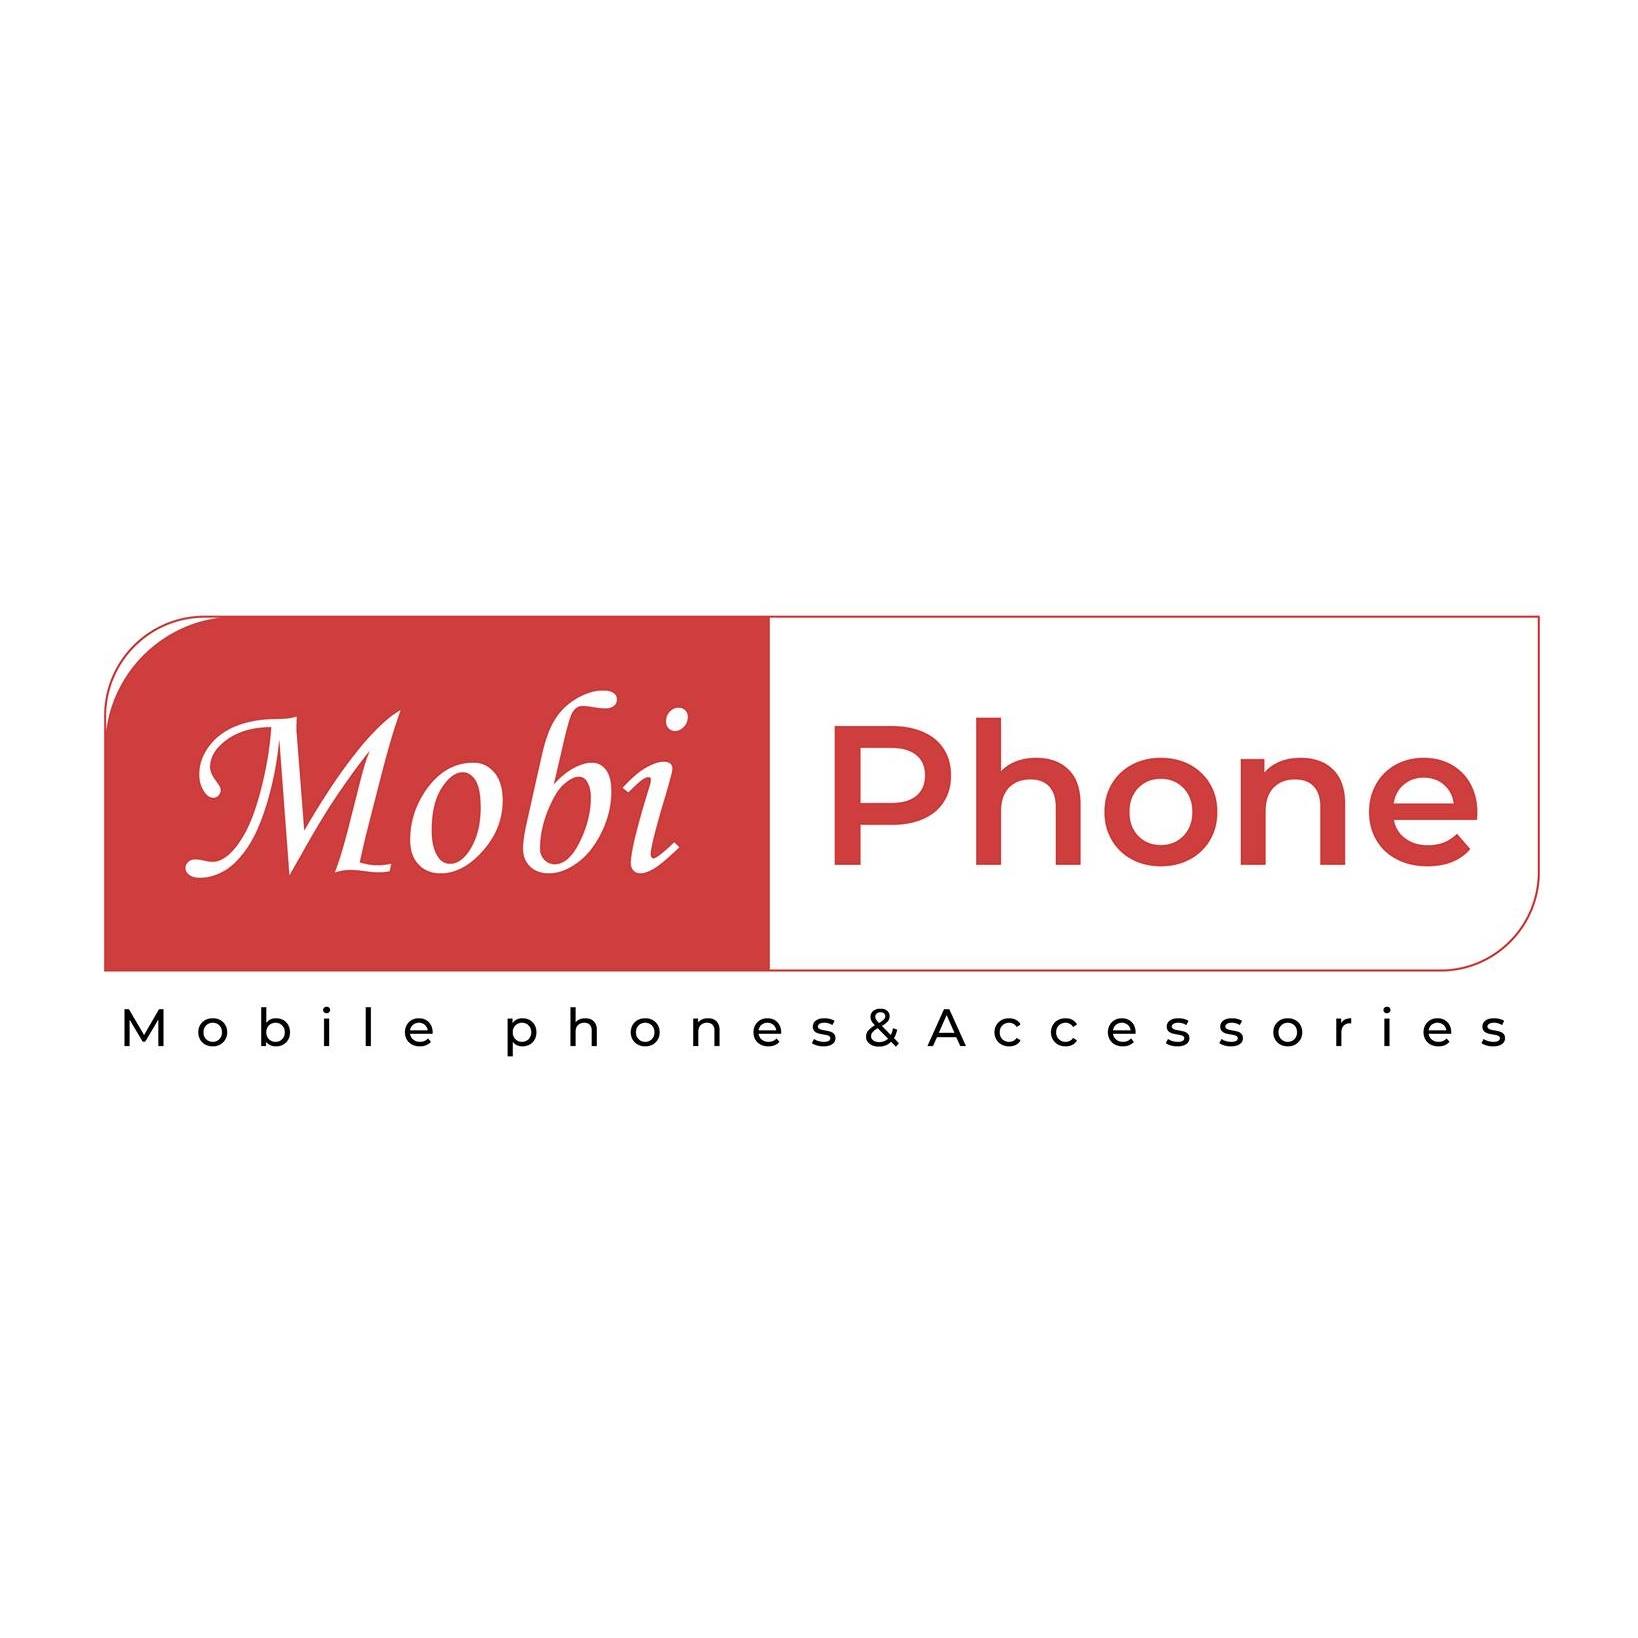 Mobiphone Company